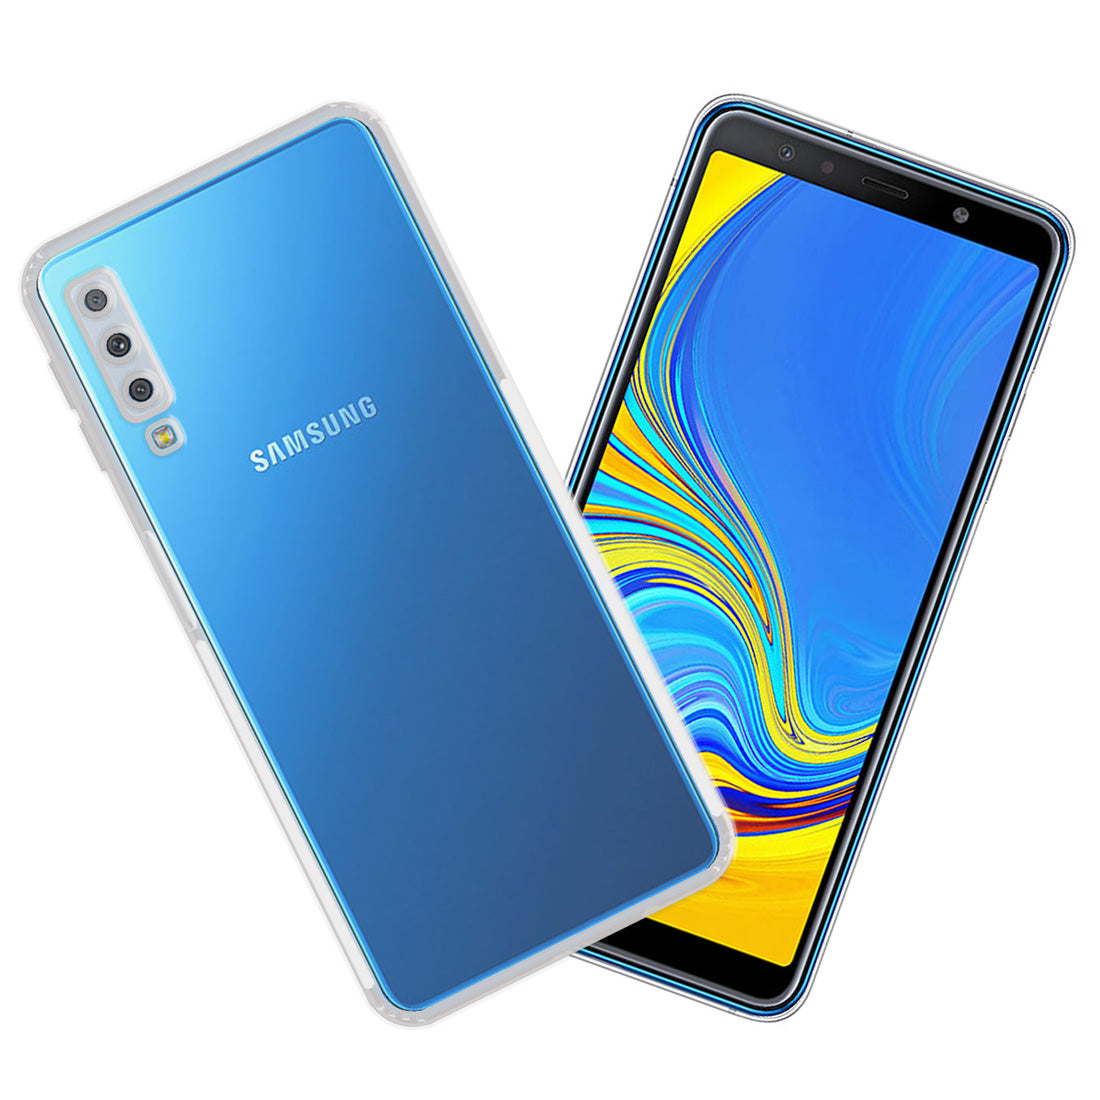 Anti Dust Plug Back Case Cover for Samsung Galaxy A7 (2018)